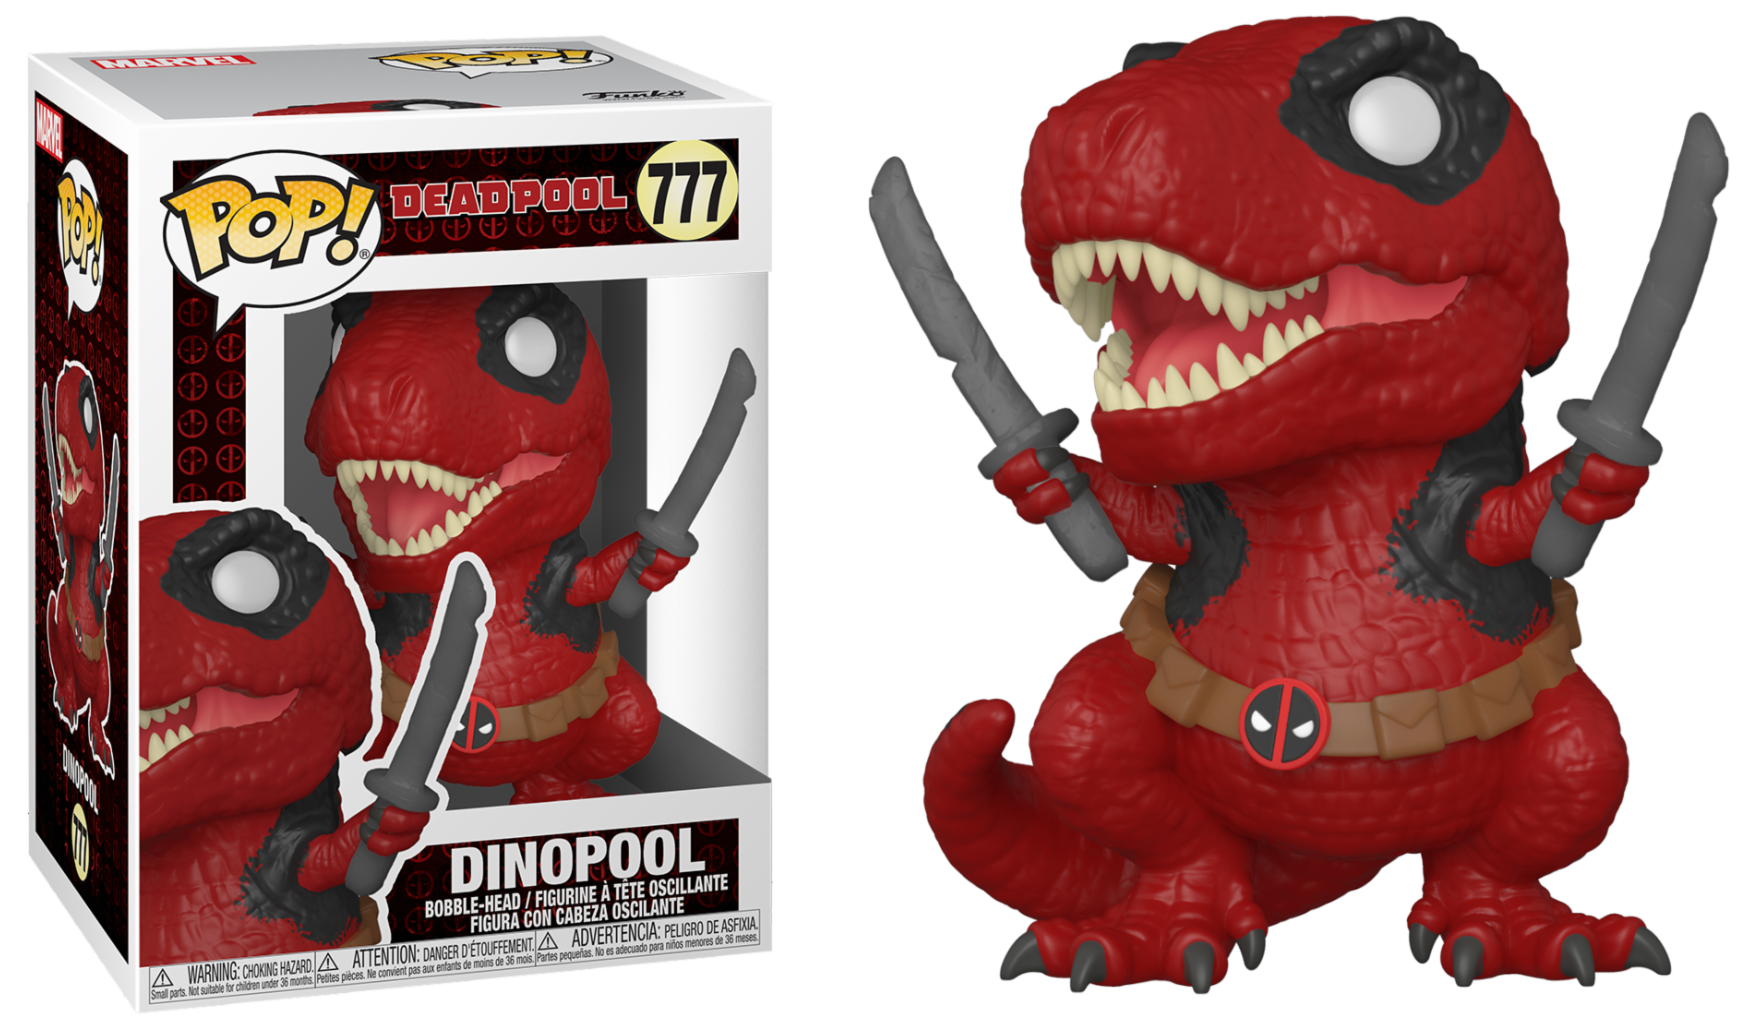 Funko pop - Deadpool 30th Anniversary - Dinopool 777 | Devastation Store